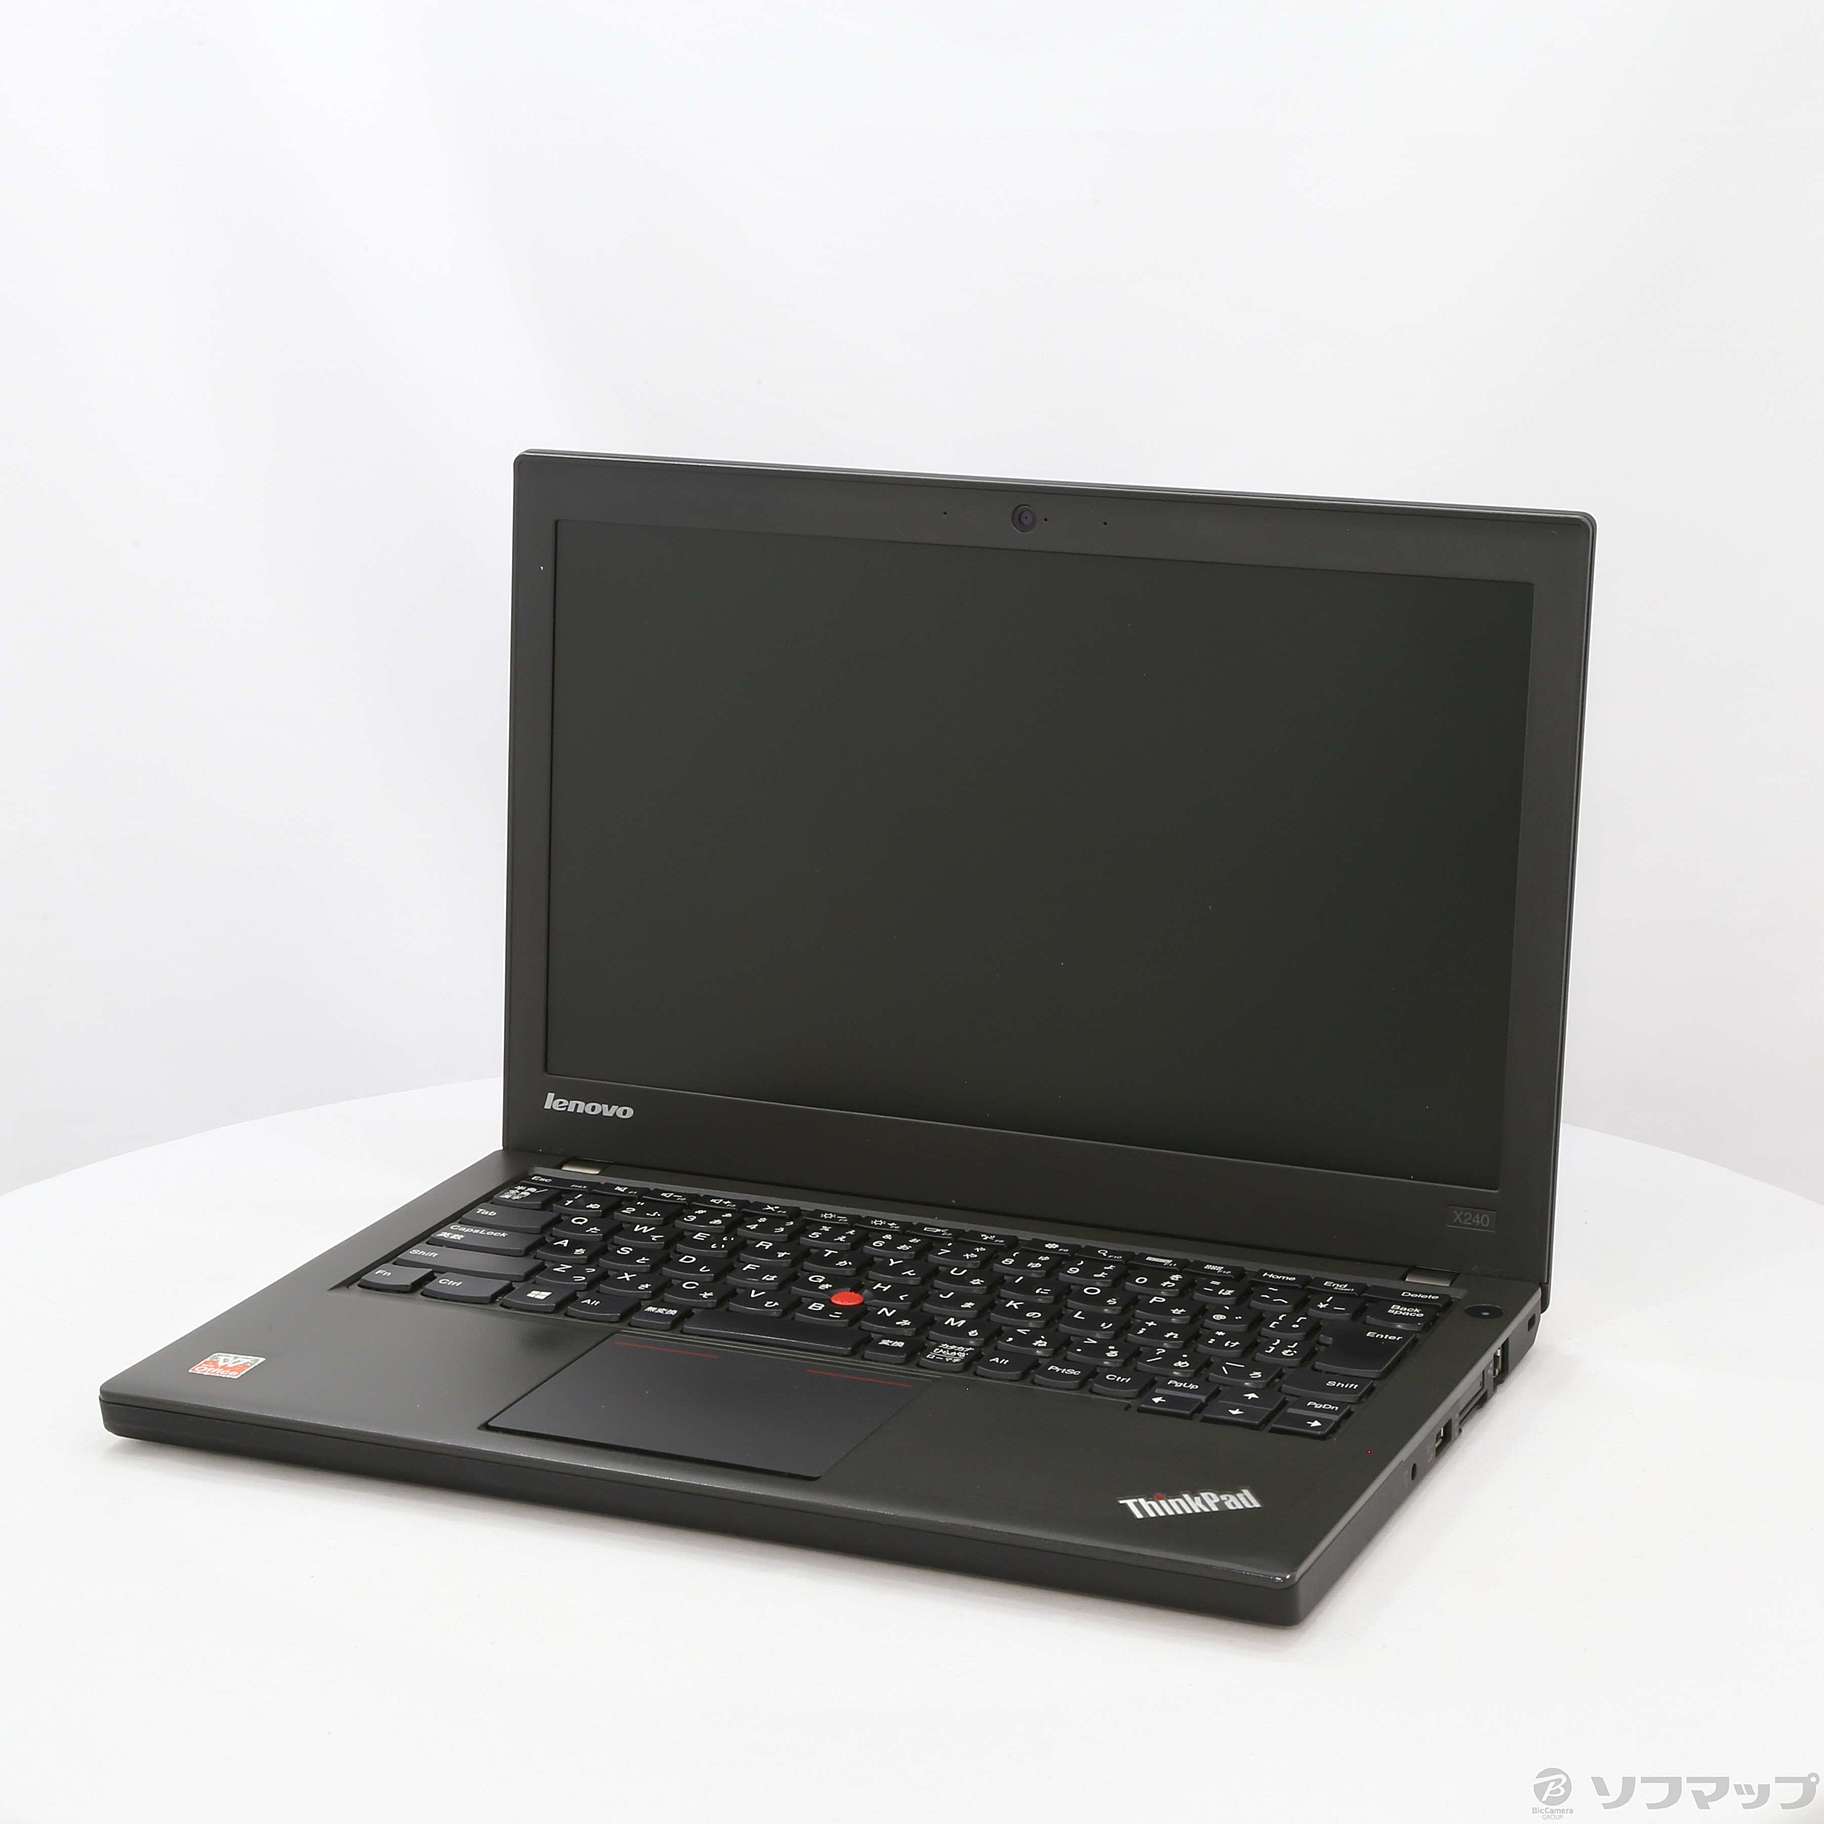 ThinkPad x240 corei5モデル